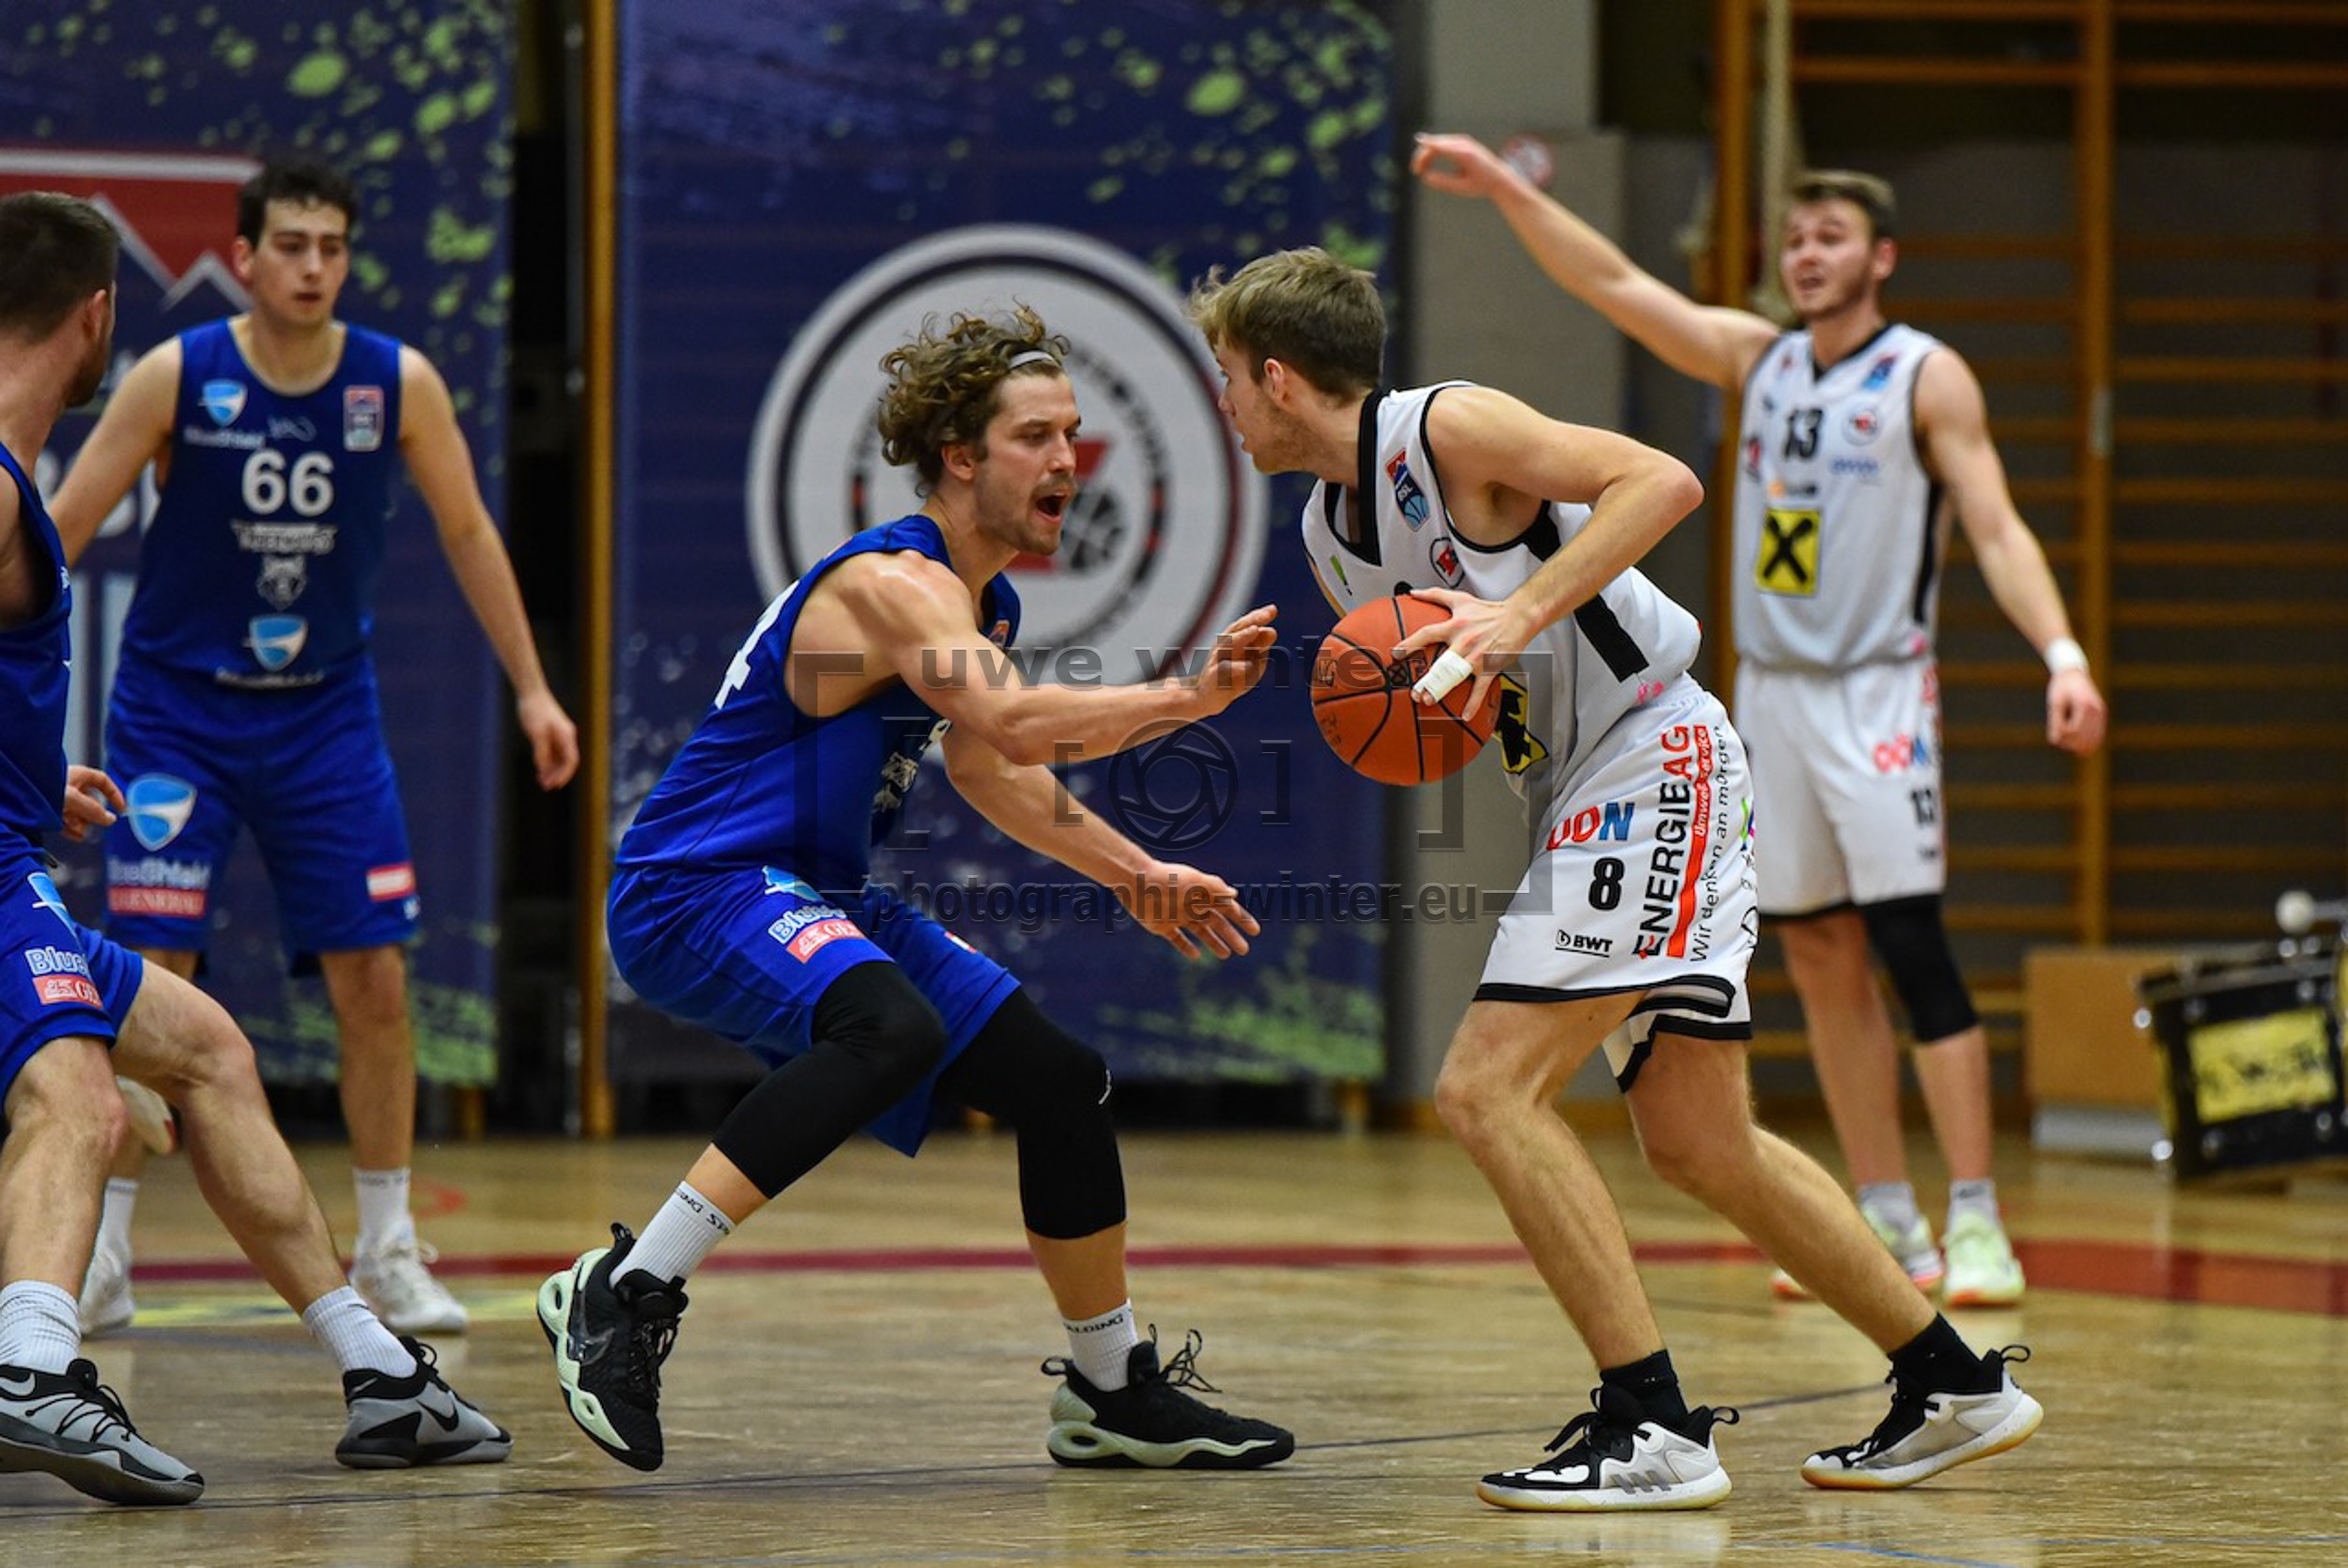 Basketball_Raiffeisen_Flyers_Wels_vs_BC_Vienna_-6